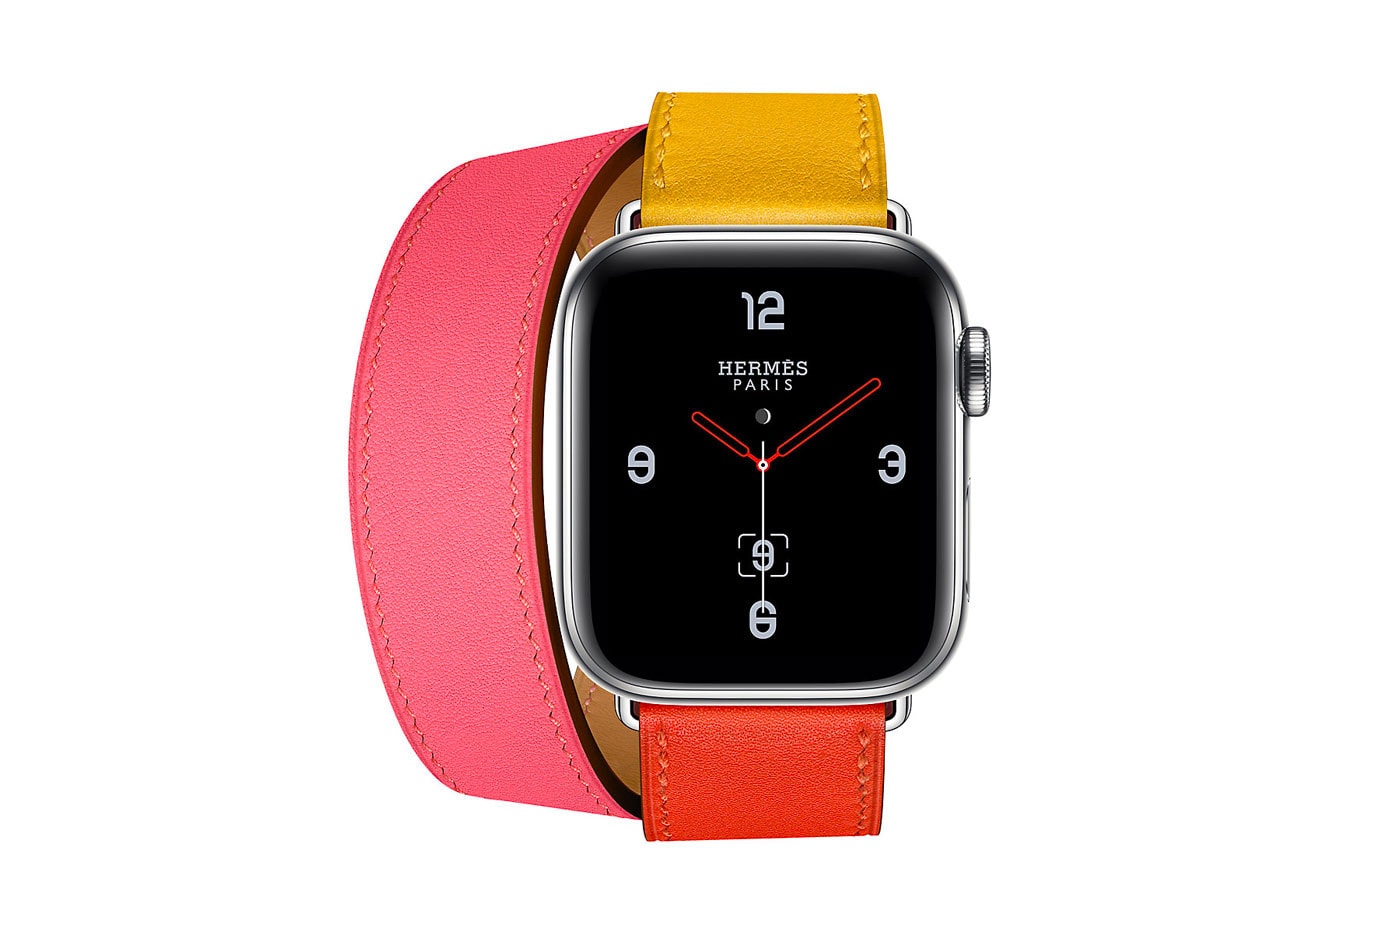 Hermès 推出全新 Apple Watch Series 4 錶帶系列